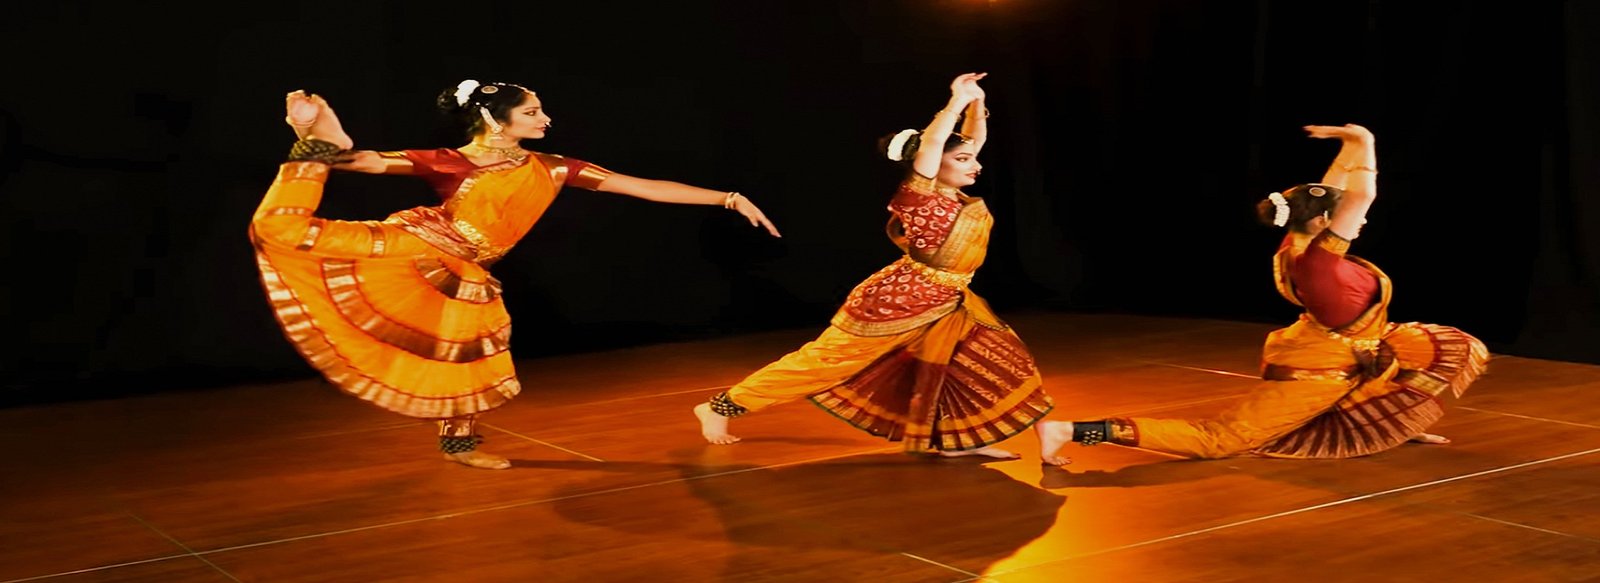 Folk and Classical Tamil Nadu Dance Forms - Same Day Tour Blog